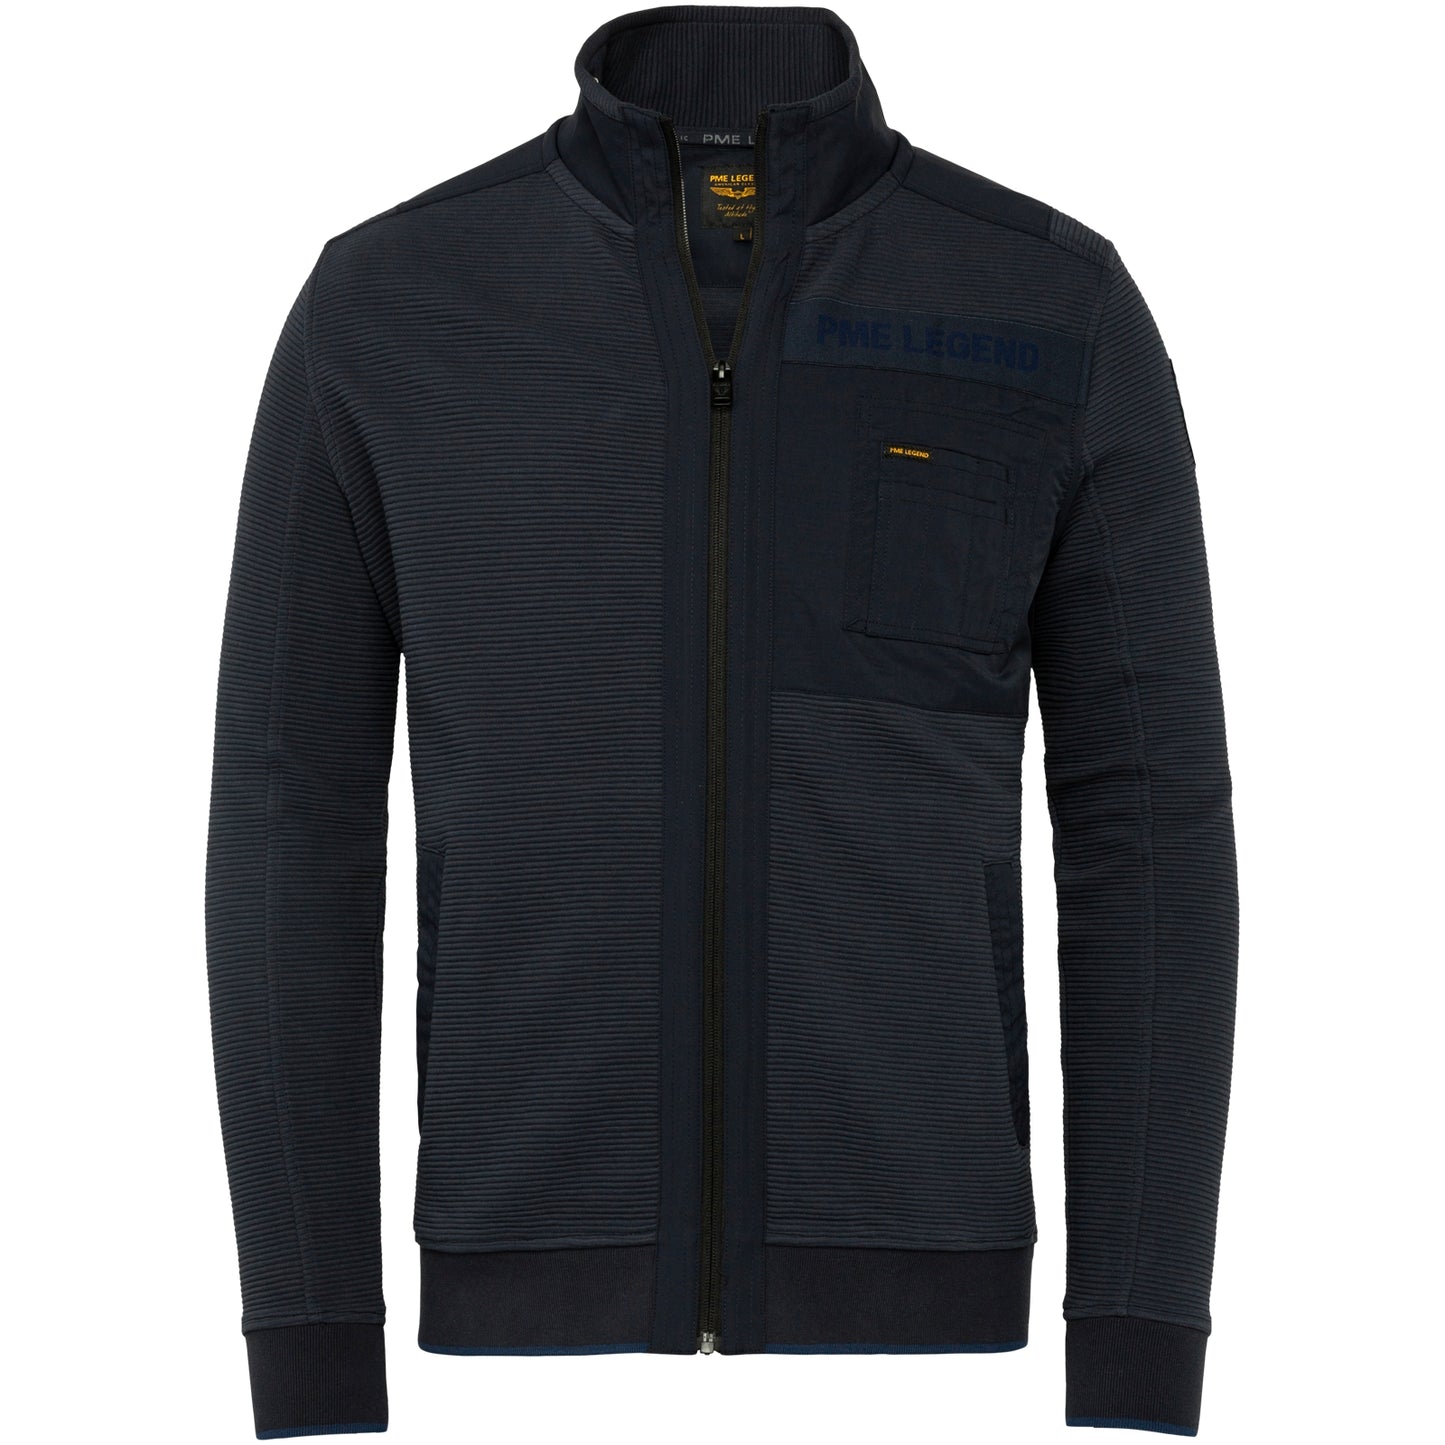 Zip jacket ottoman sweat - PSW211403